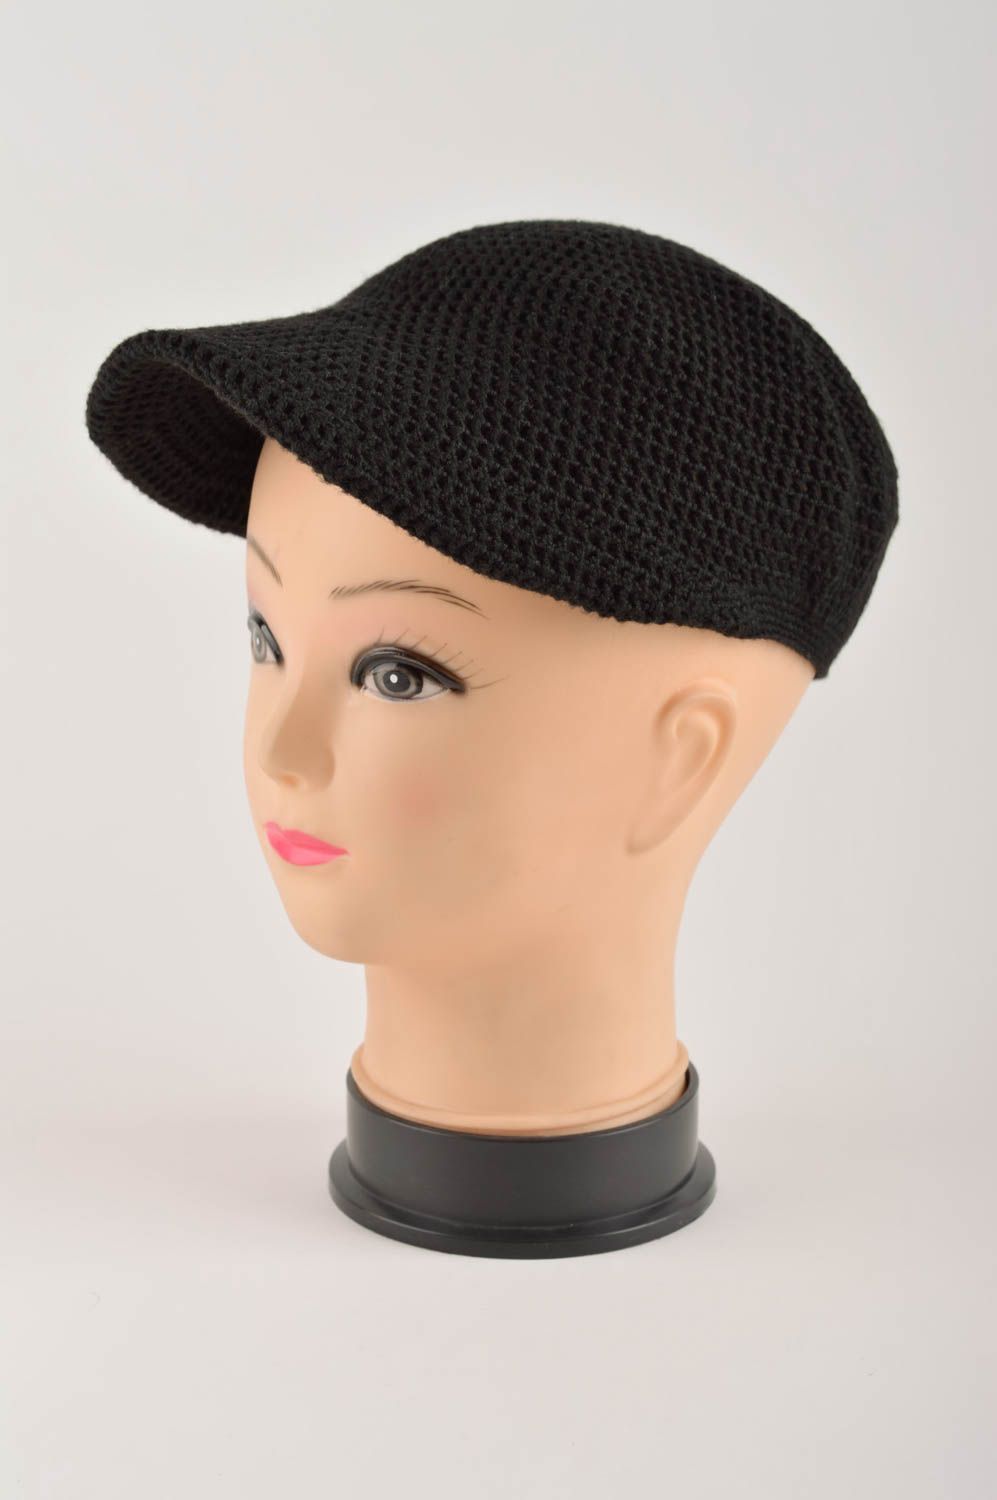 Handmade hat designer cap unusual gift ideas women hat summer hat for girls photo 2